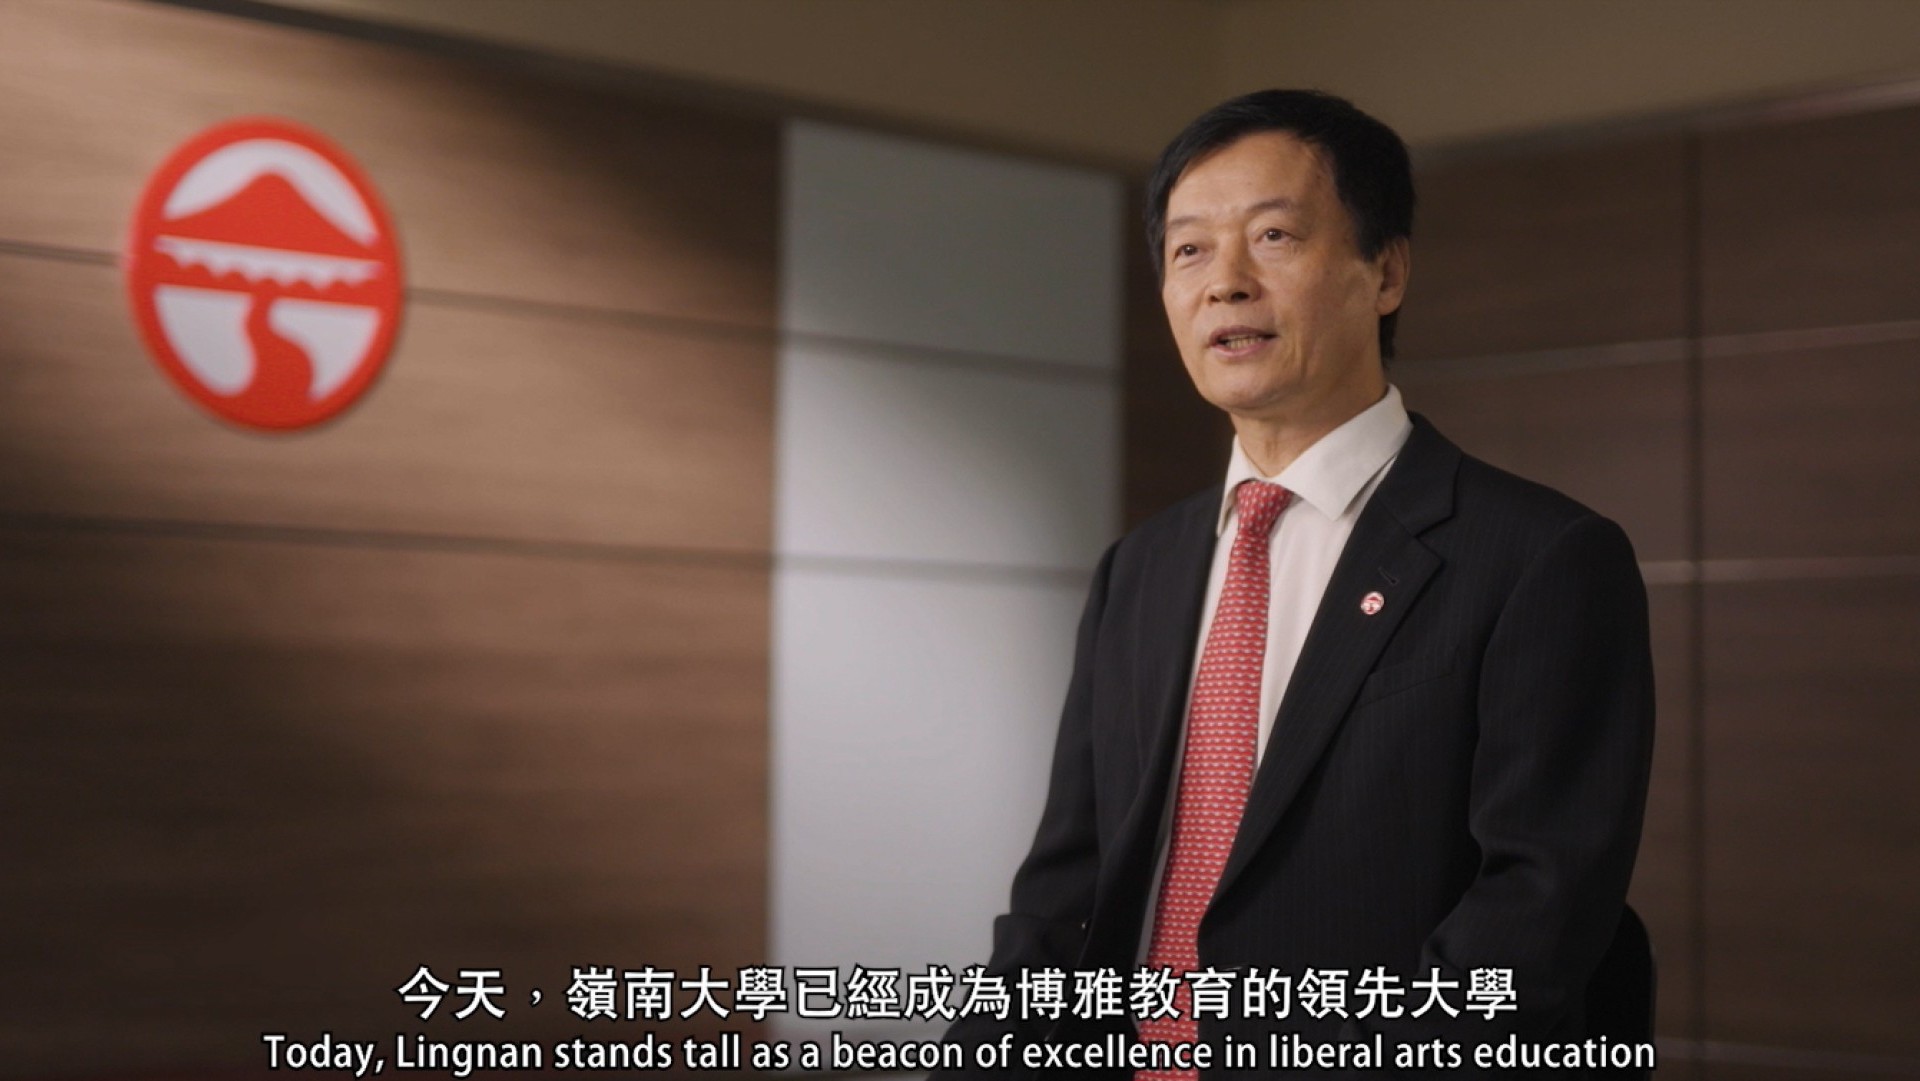 President S. Joe Qin's Vision: A Digital Leap for Lingnan University